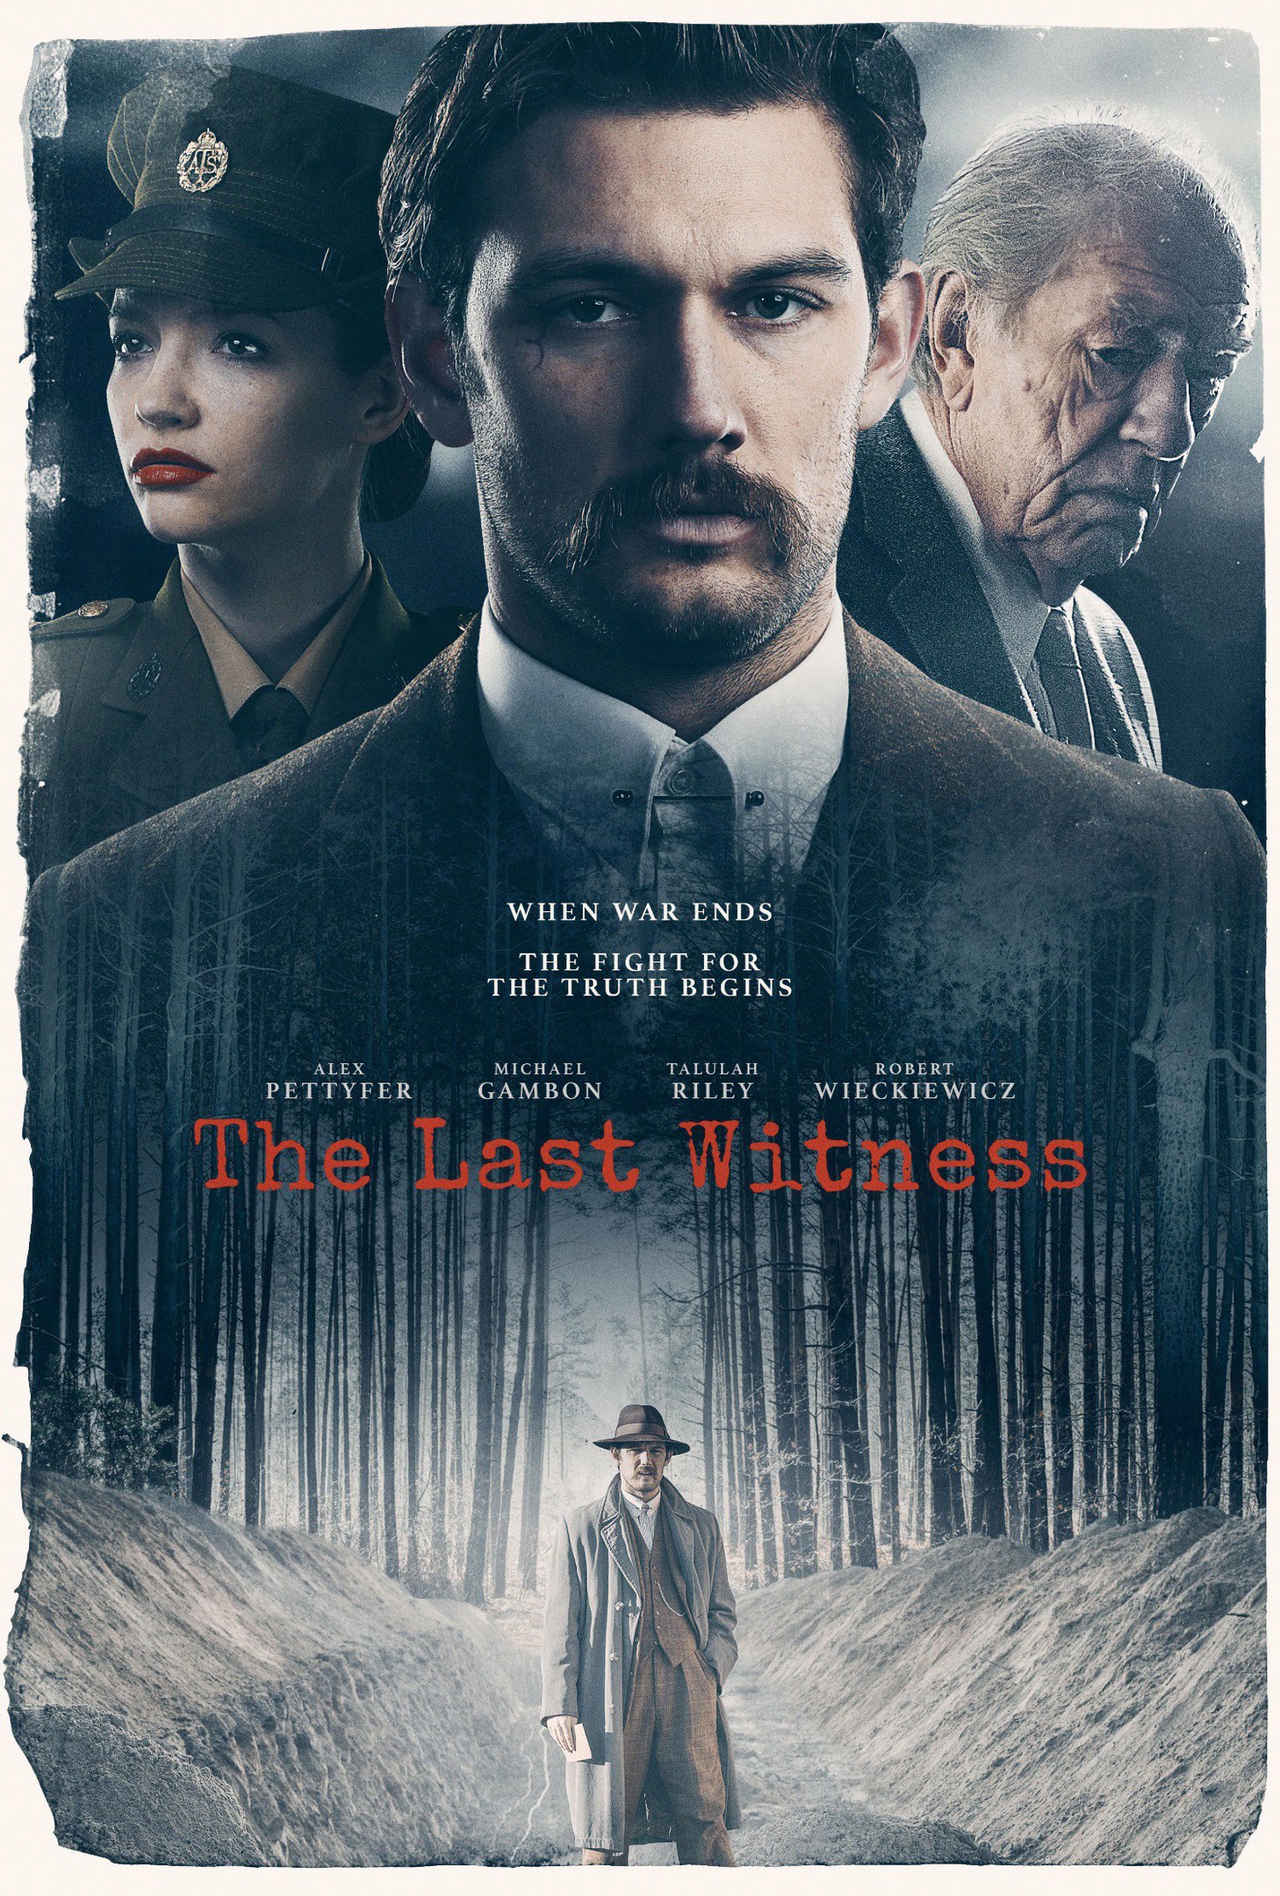 Alex Pettyfer در صحنه فیلم سینمایی The Last Witness به همراه مایکل گمبون و Talulah Riley